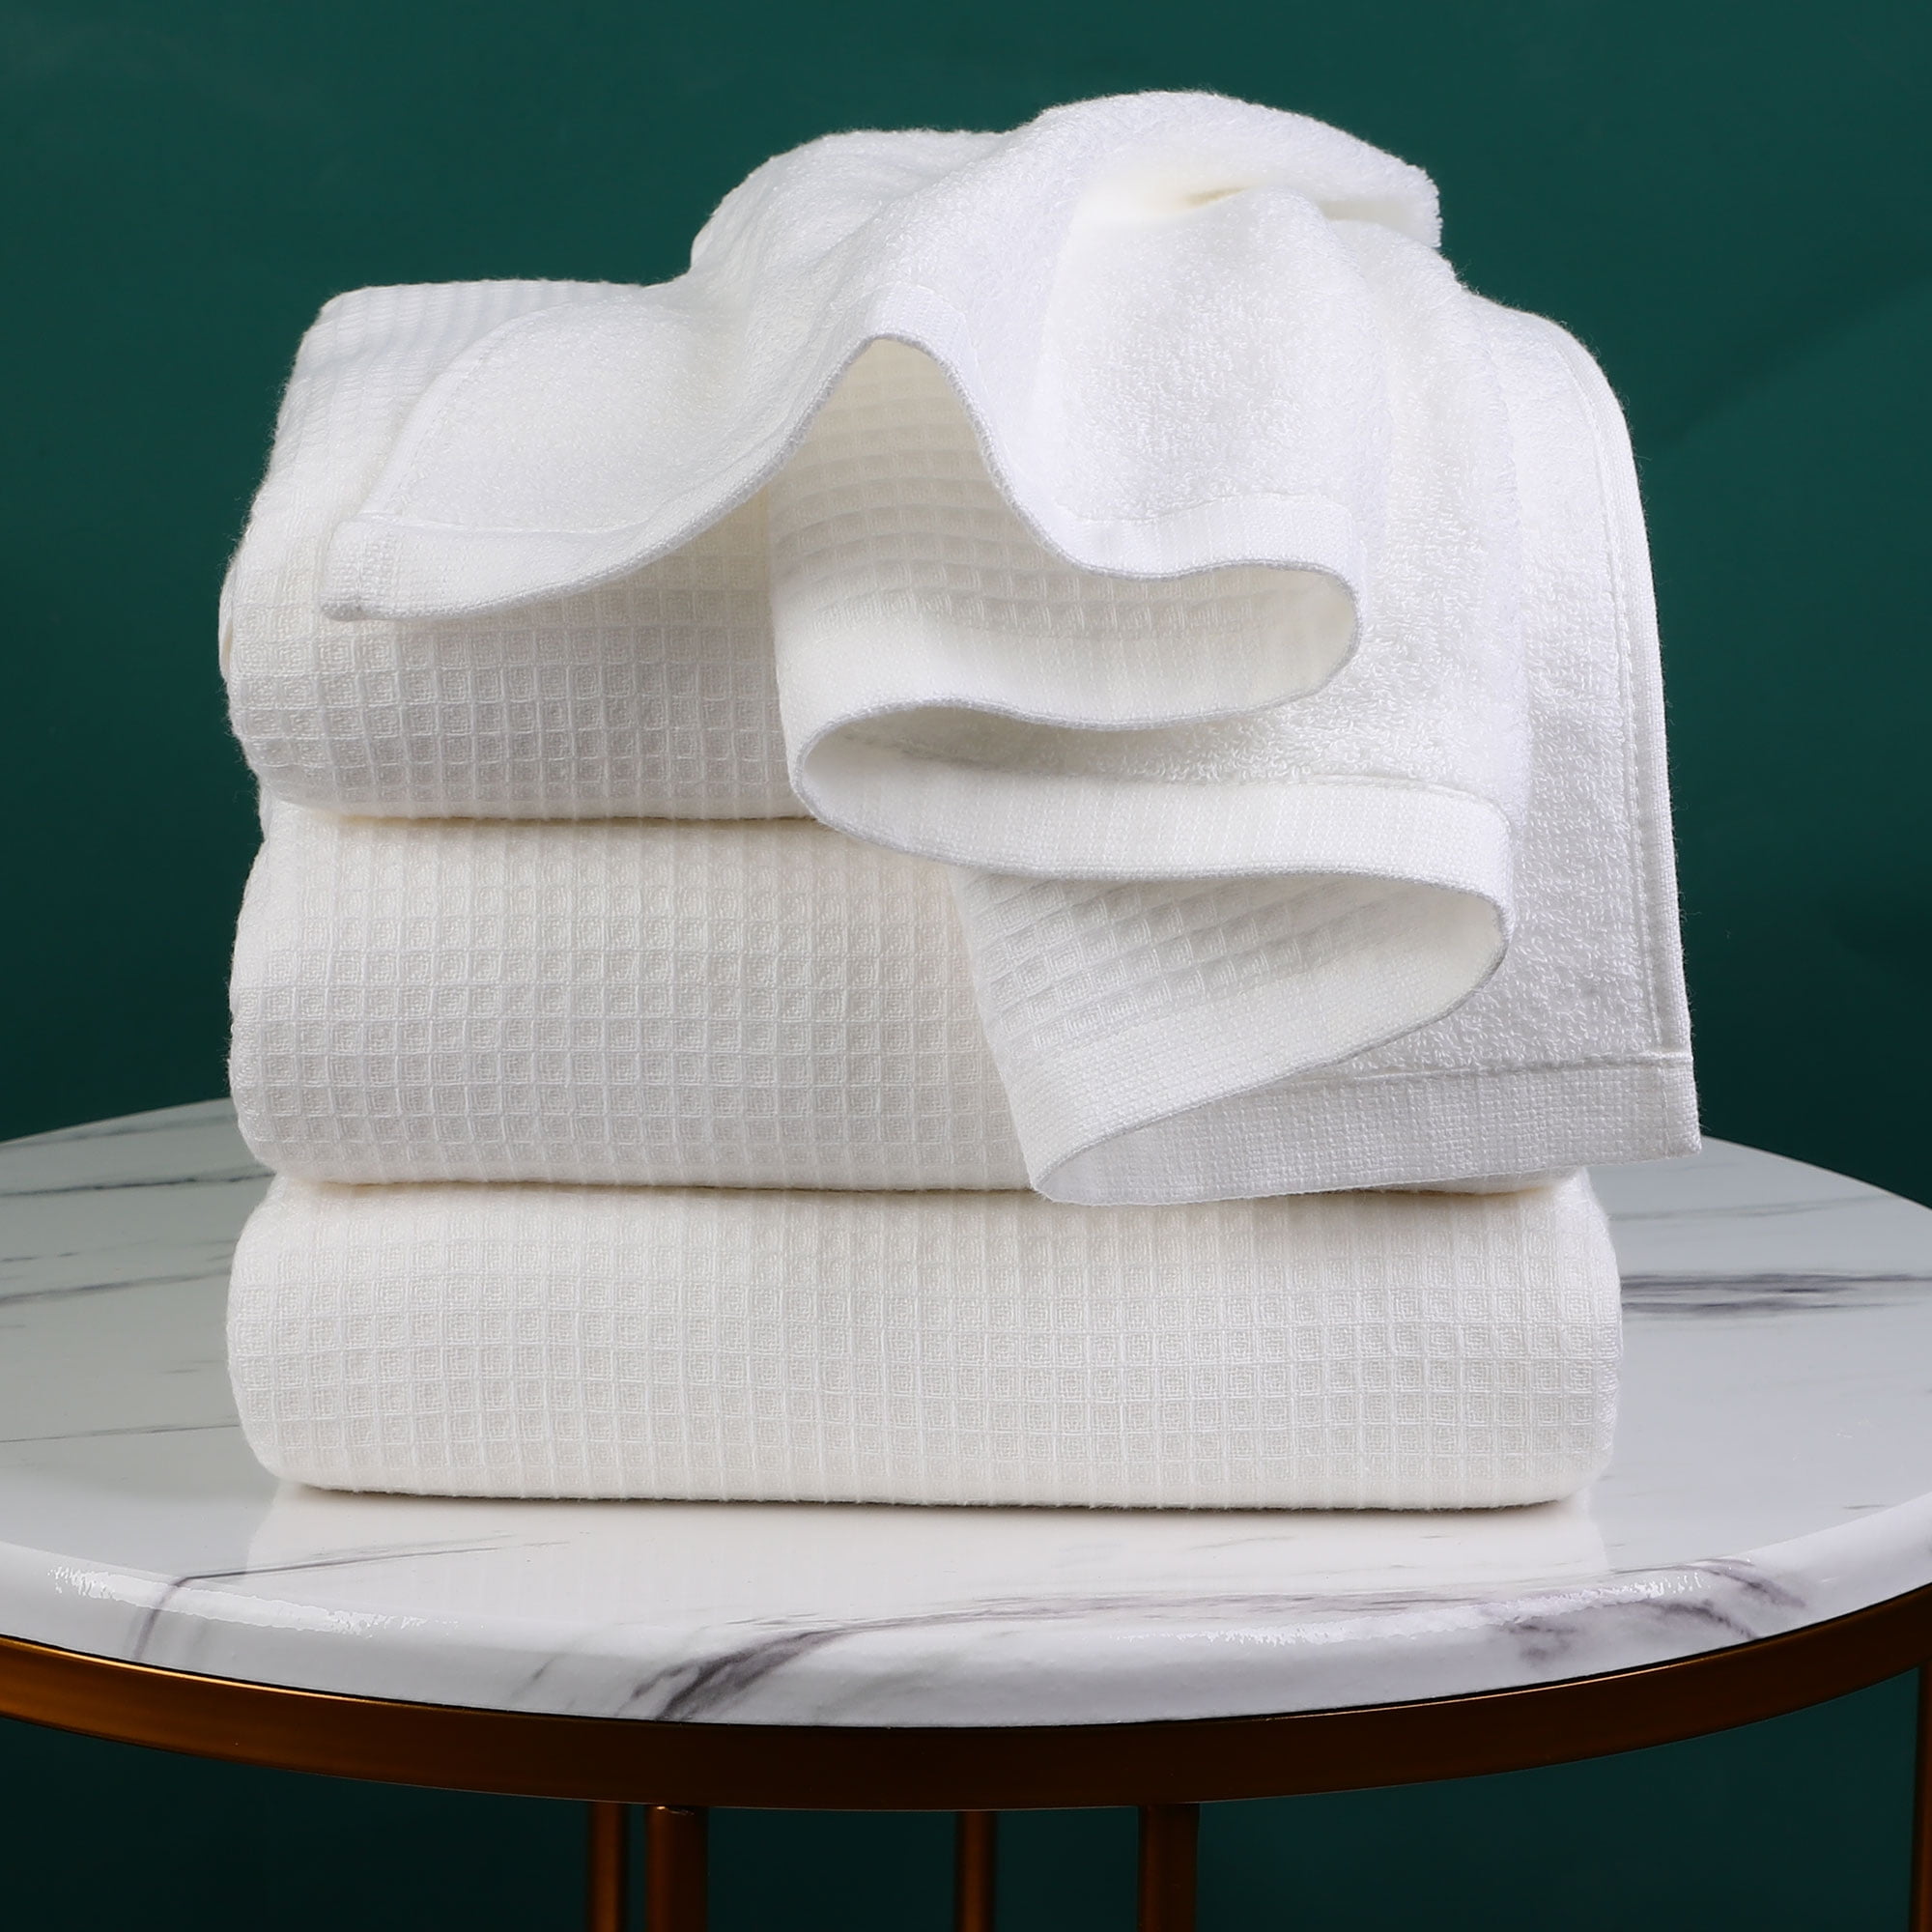 4 Pieces Wealuxe Bath Towels - 27x52 inch - White